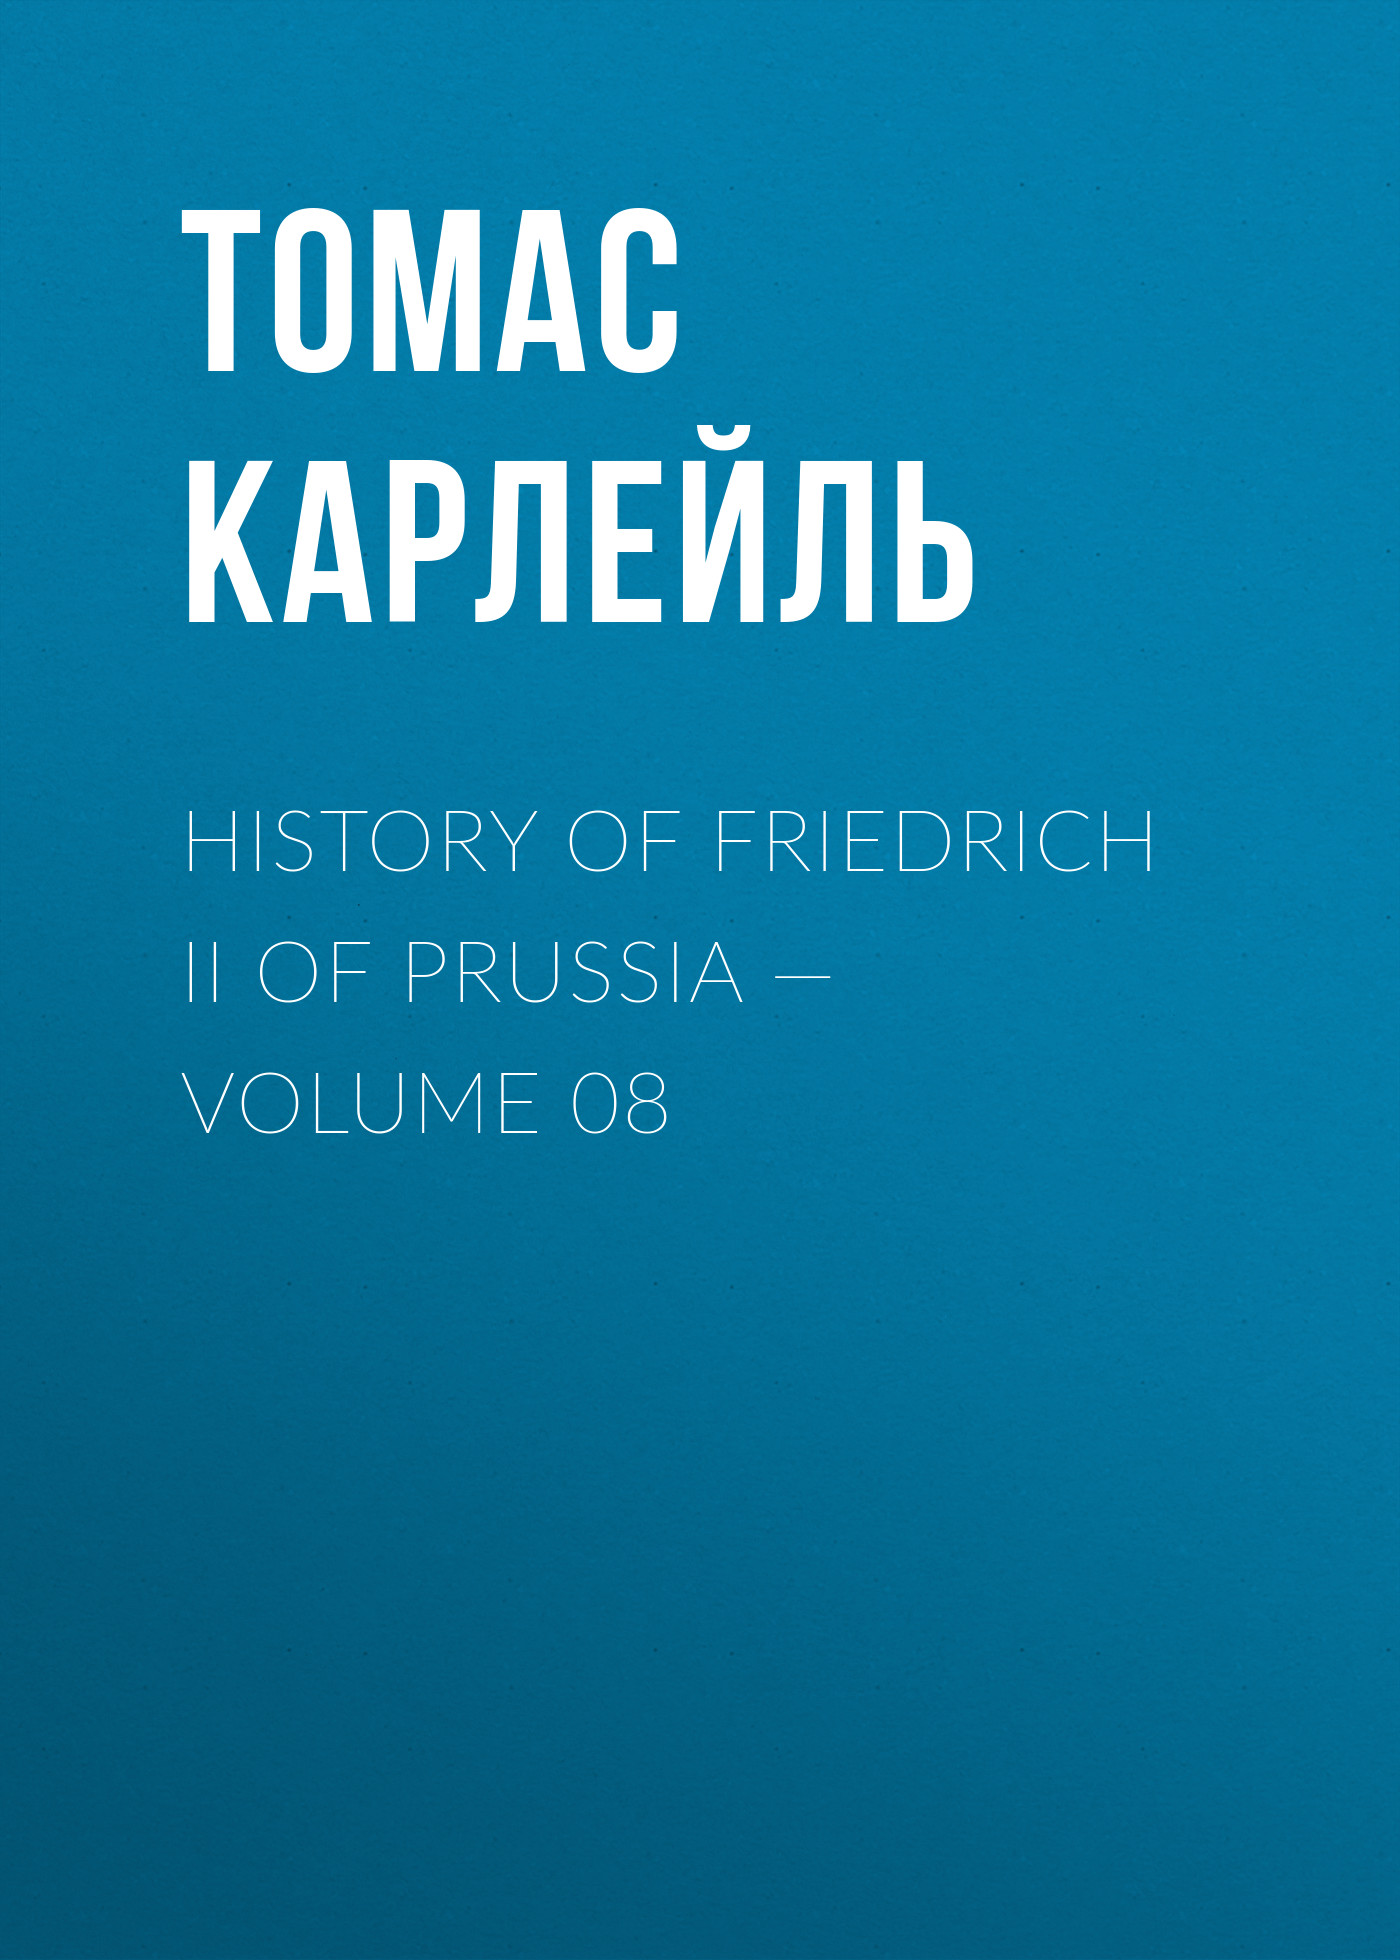 History of Friedrich II of Prussia— Volume 08